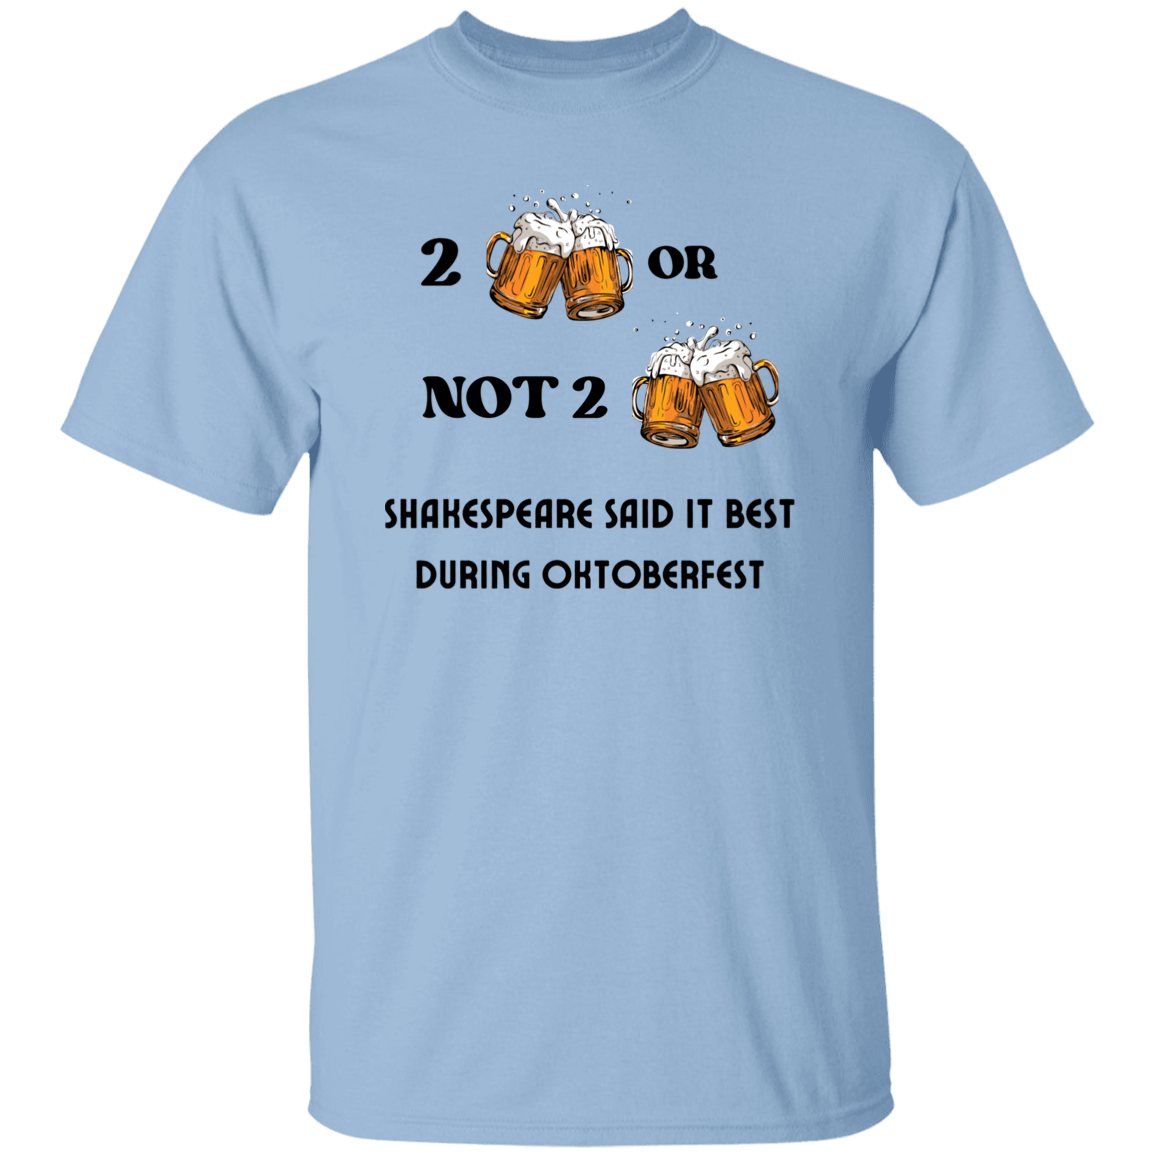 2 Beers or Not 2 Beers T-Shirt